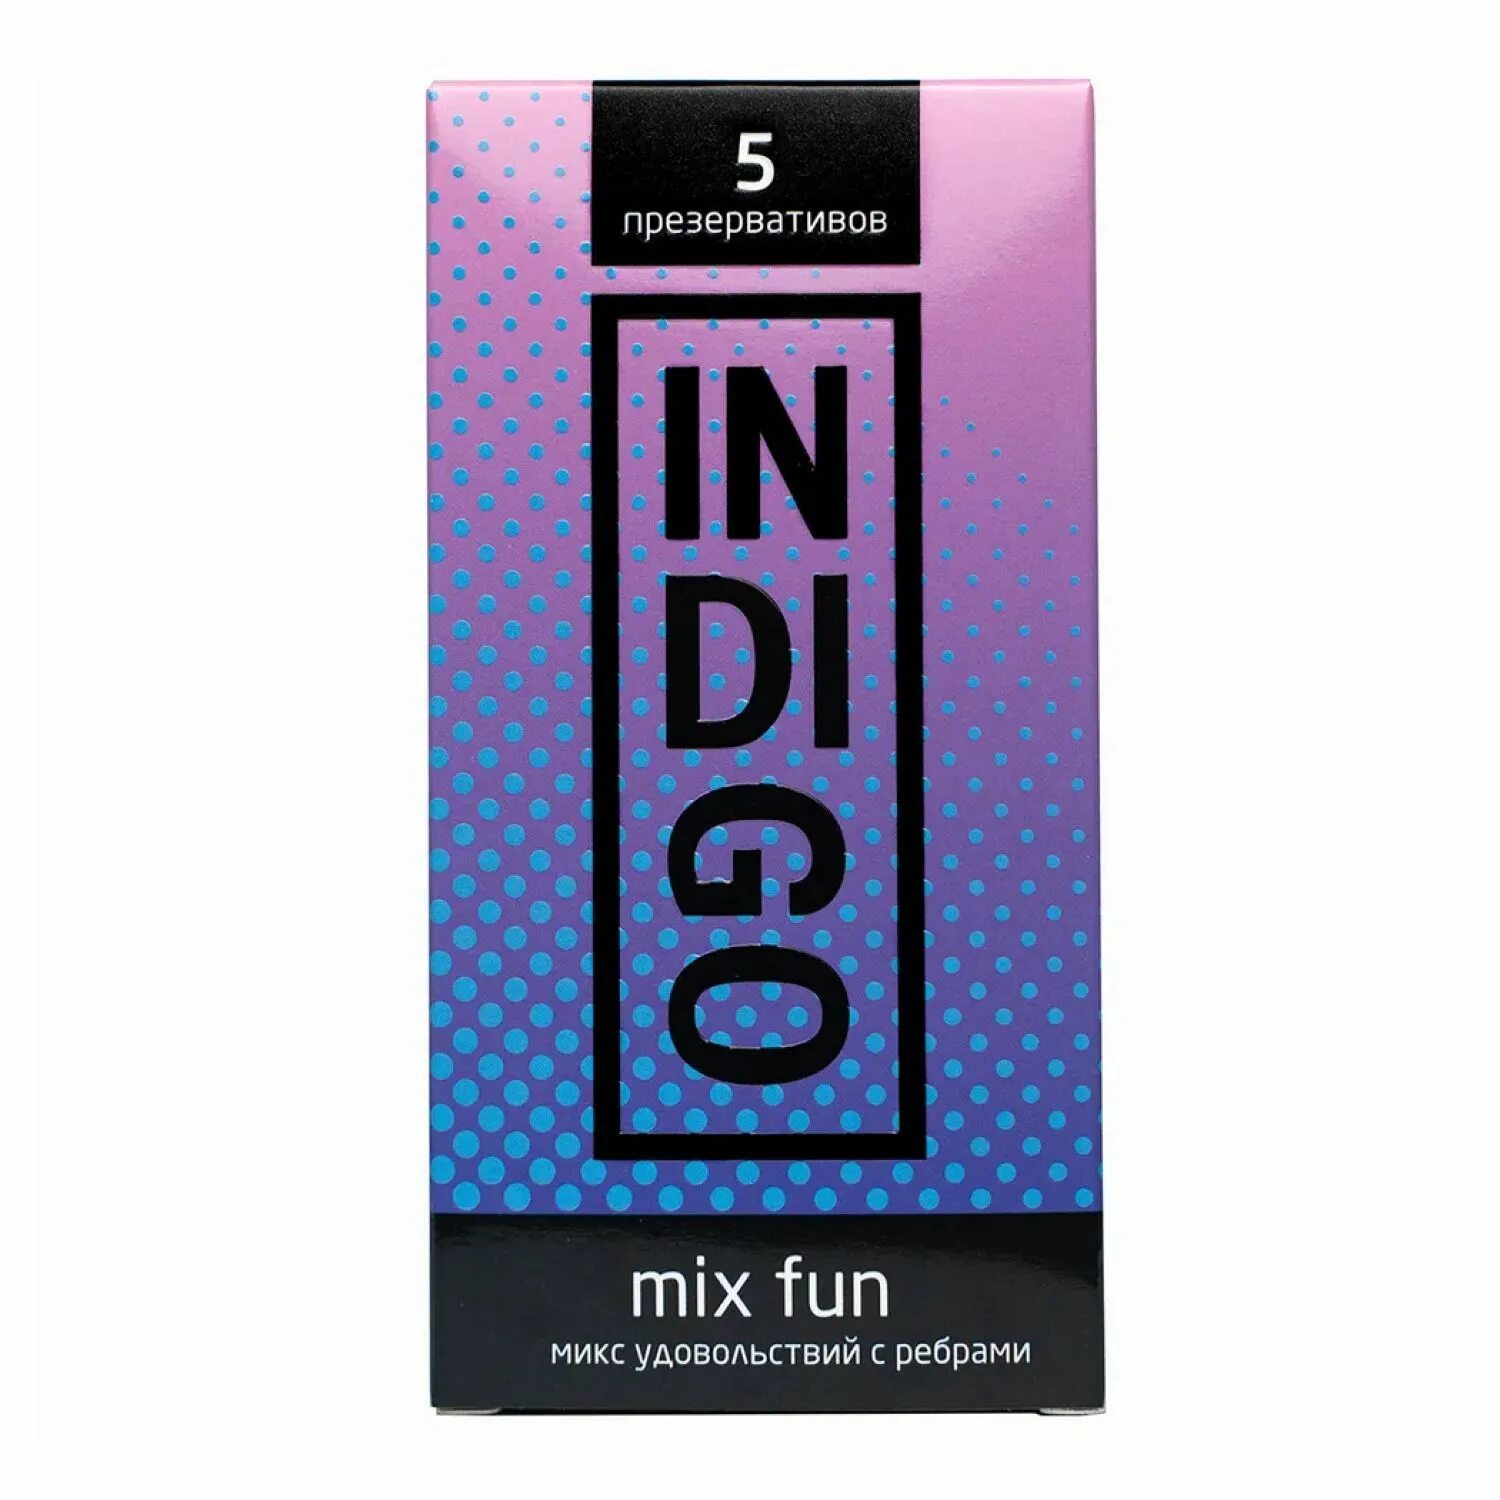 Fun mix. Indigo презики. Микс фан. Индиго презики отзывы. Презерватив с точками индиго.